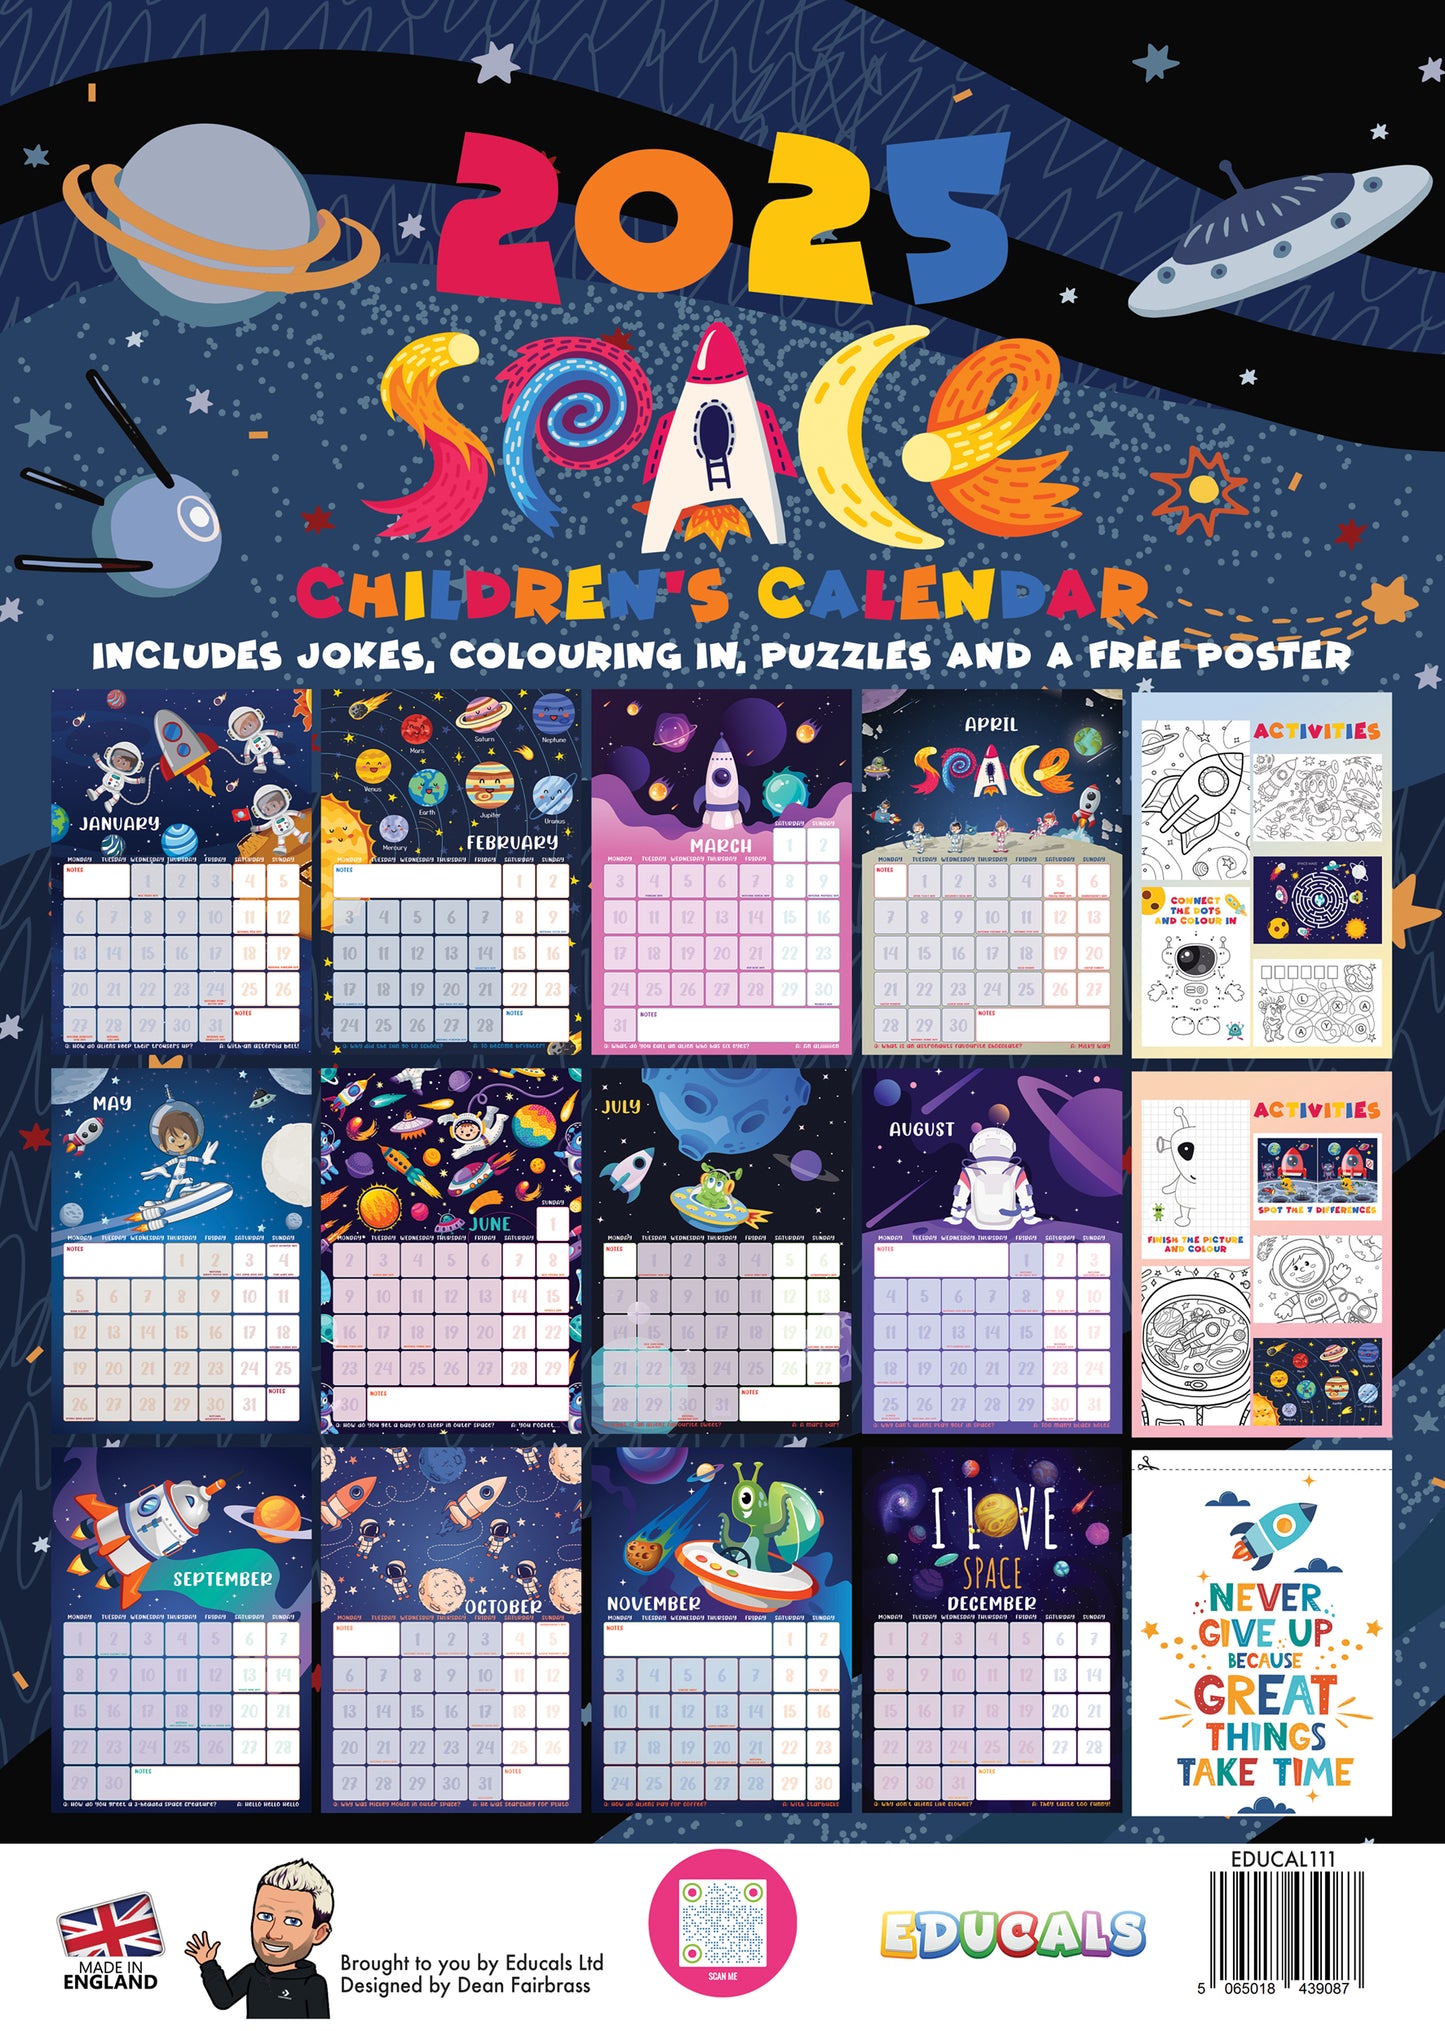 Children's 2025 Space Calendar